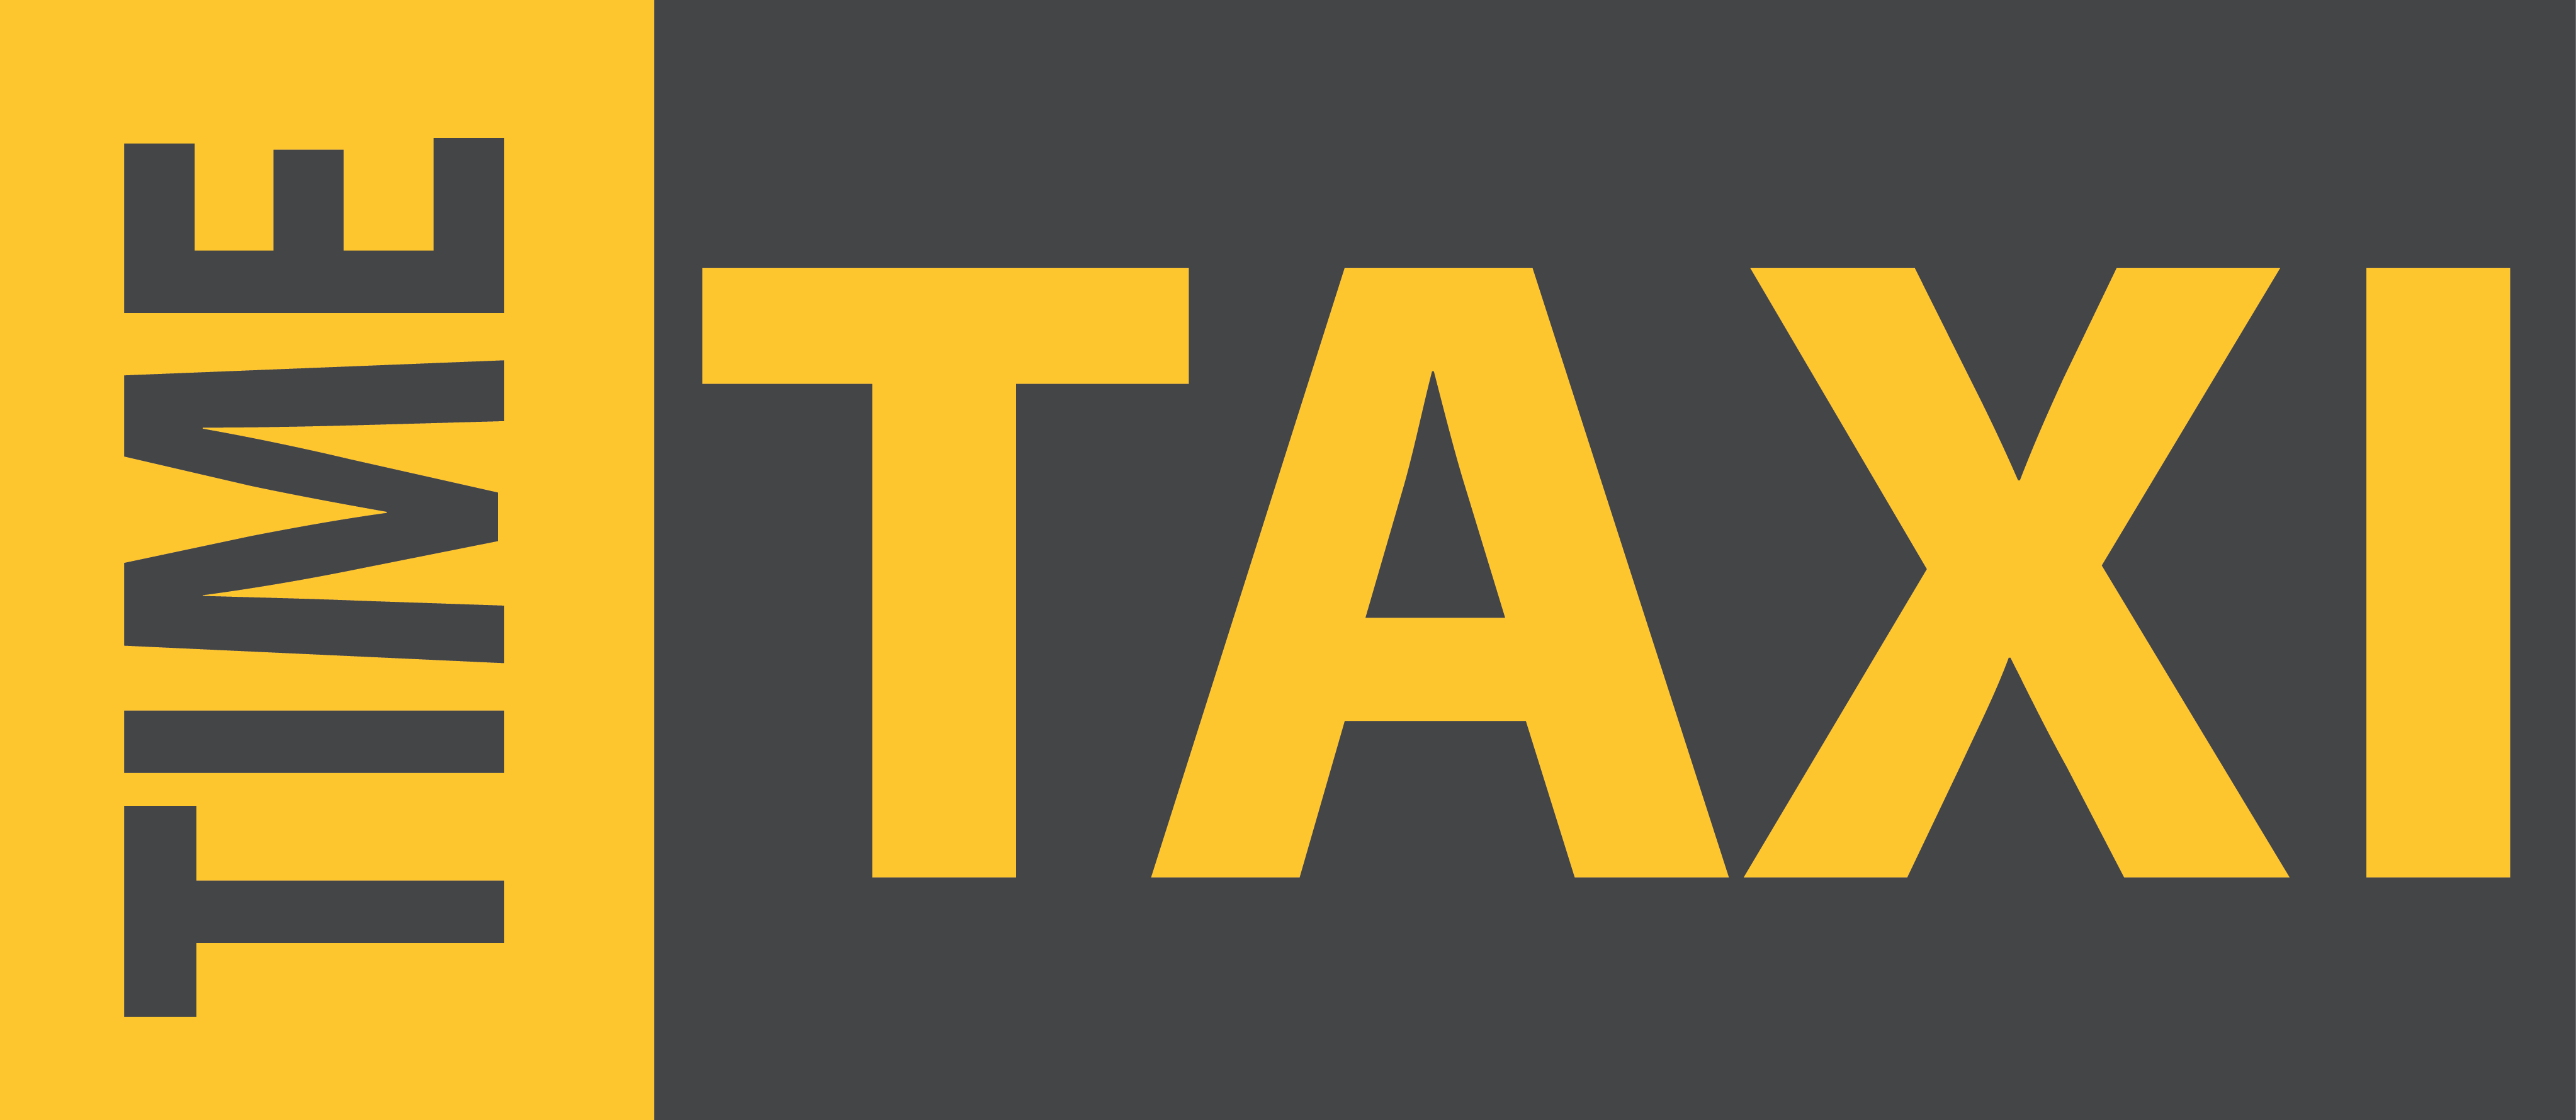 Znak taksówki